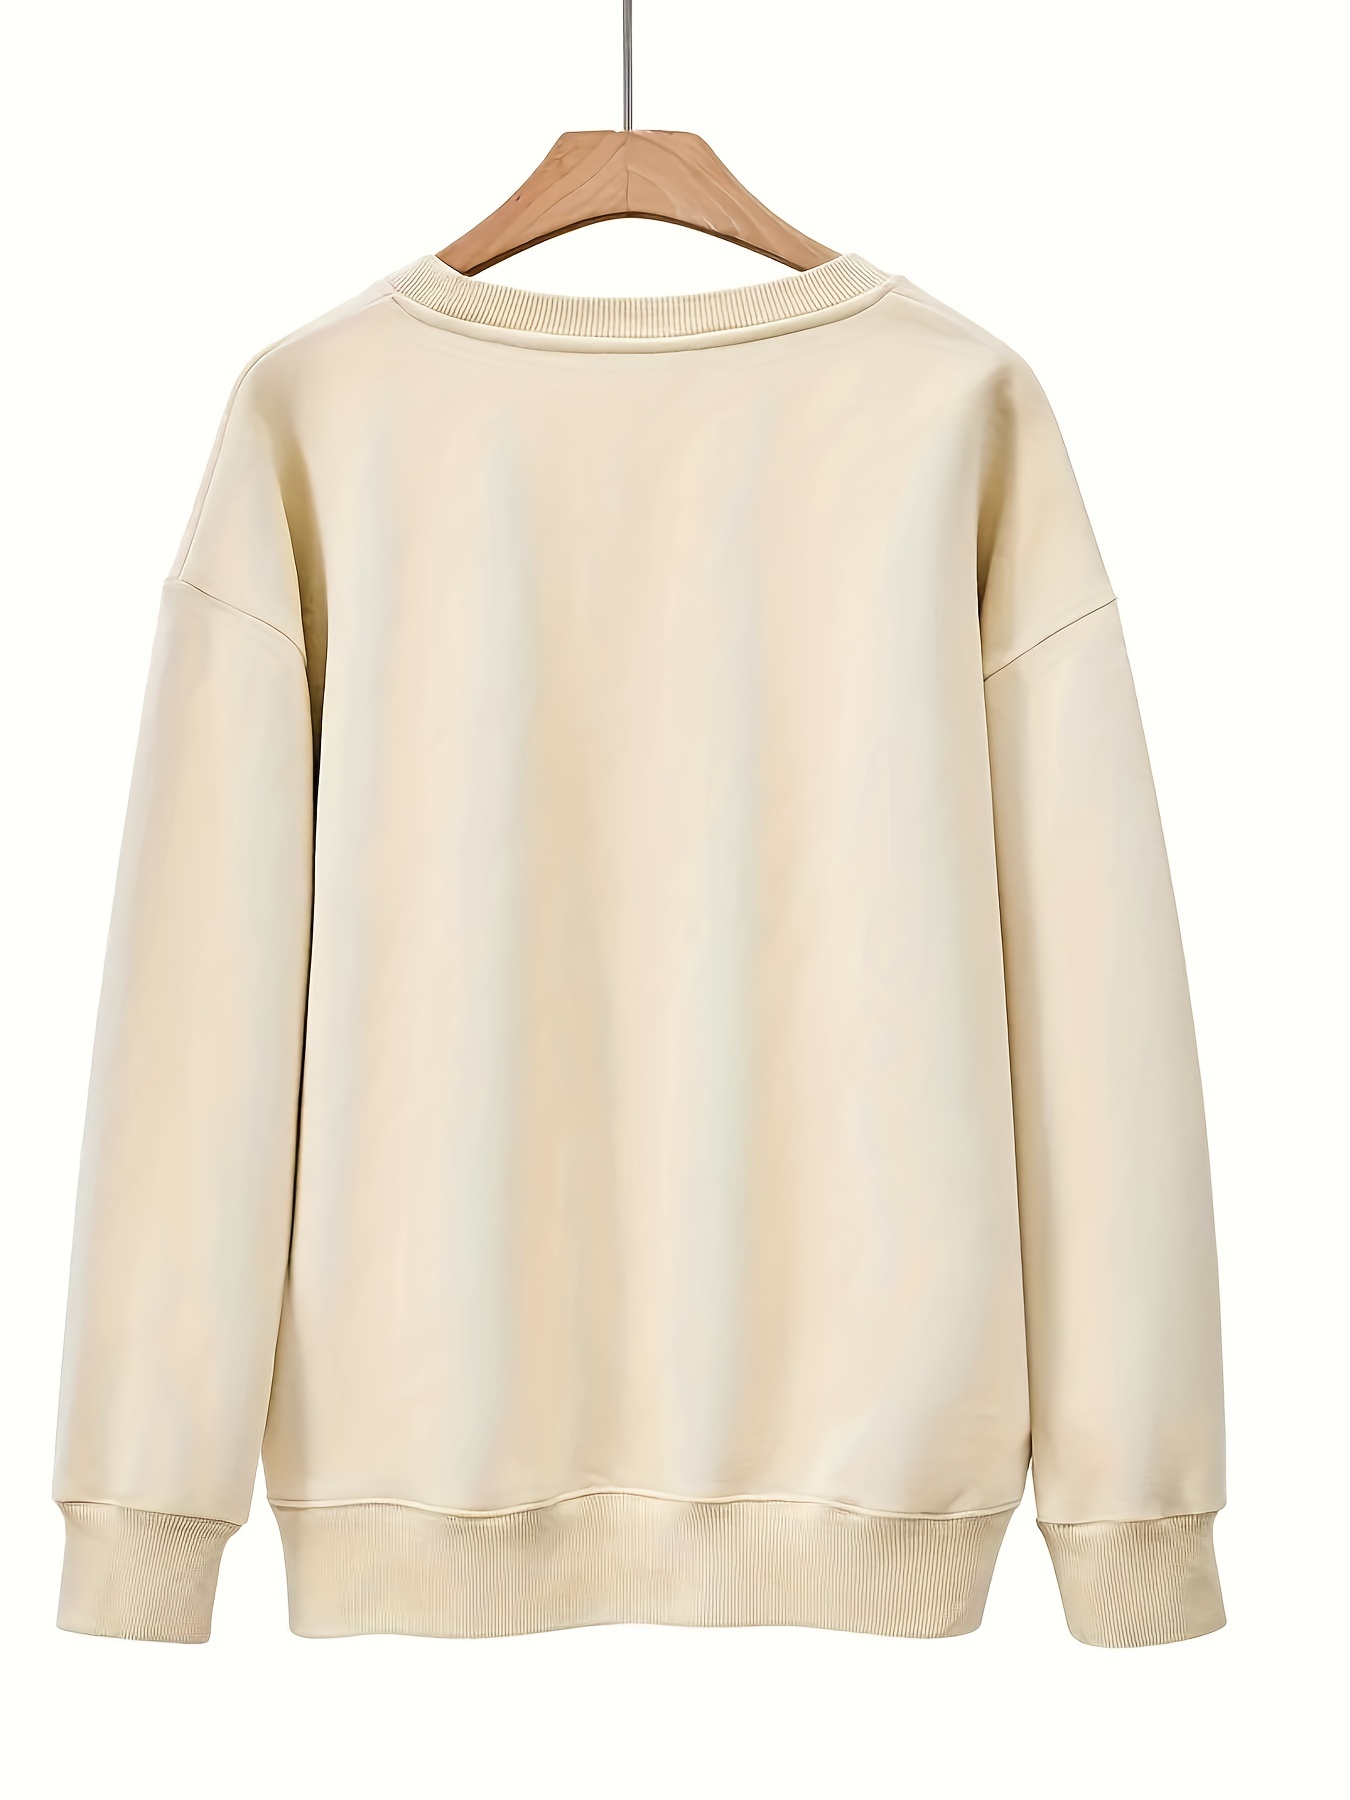 yellowstone print sweatshirt casual long sleeve crew neck sweatshirt womens clothing details 9